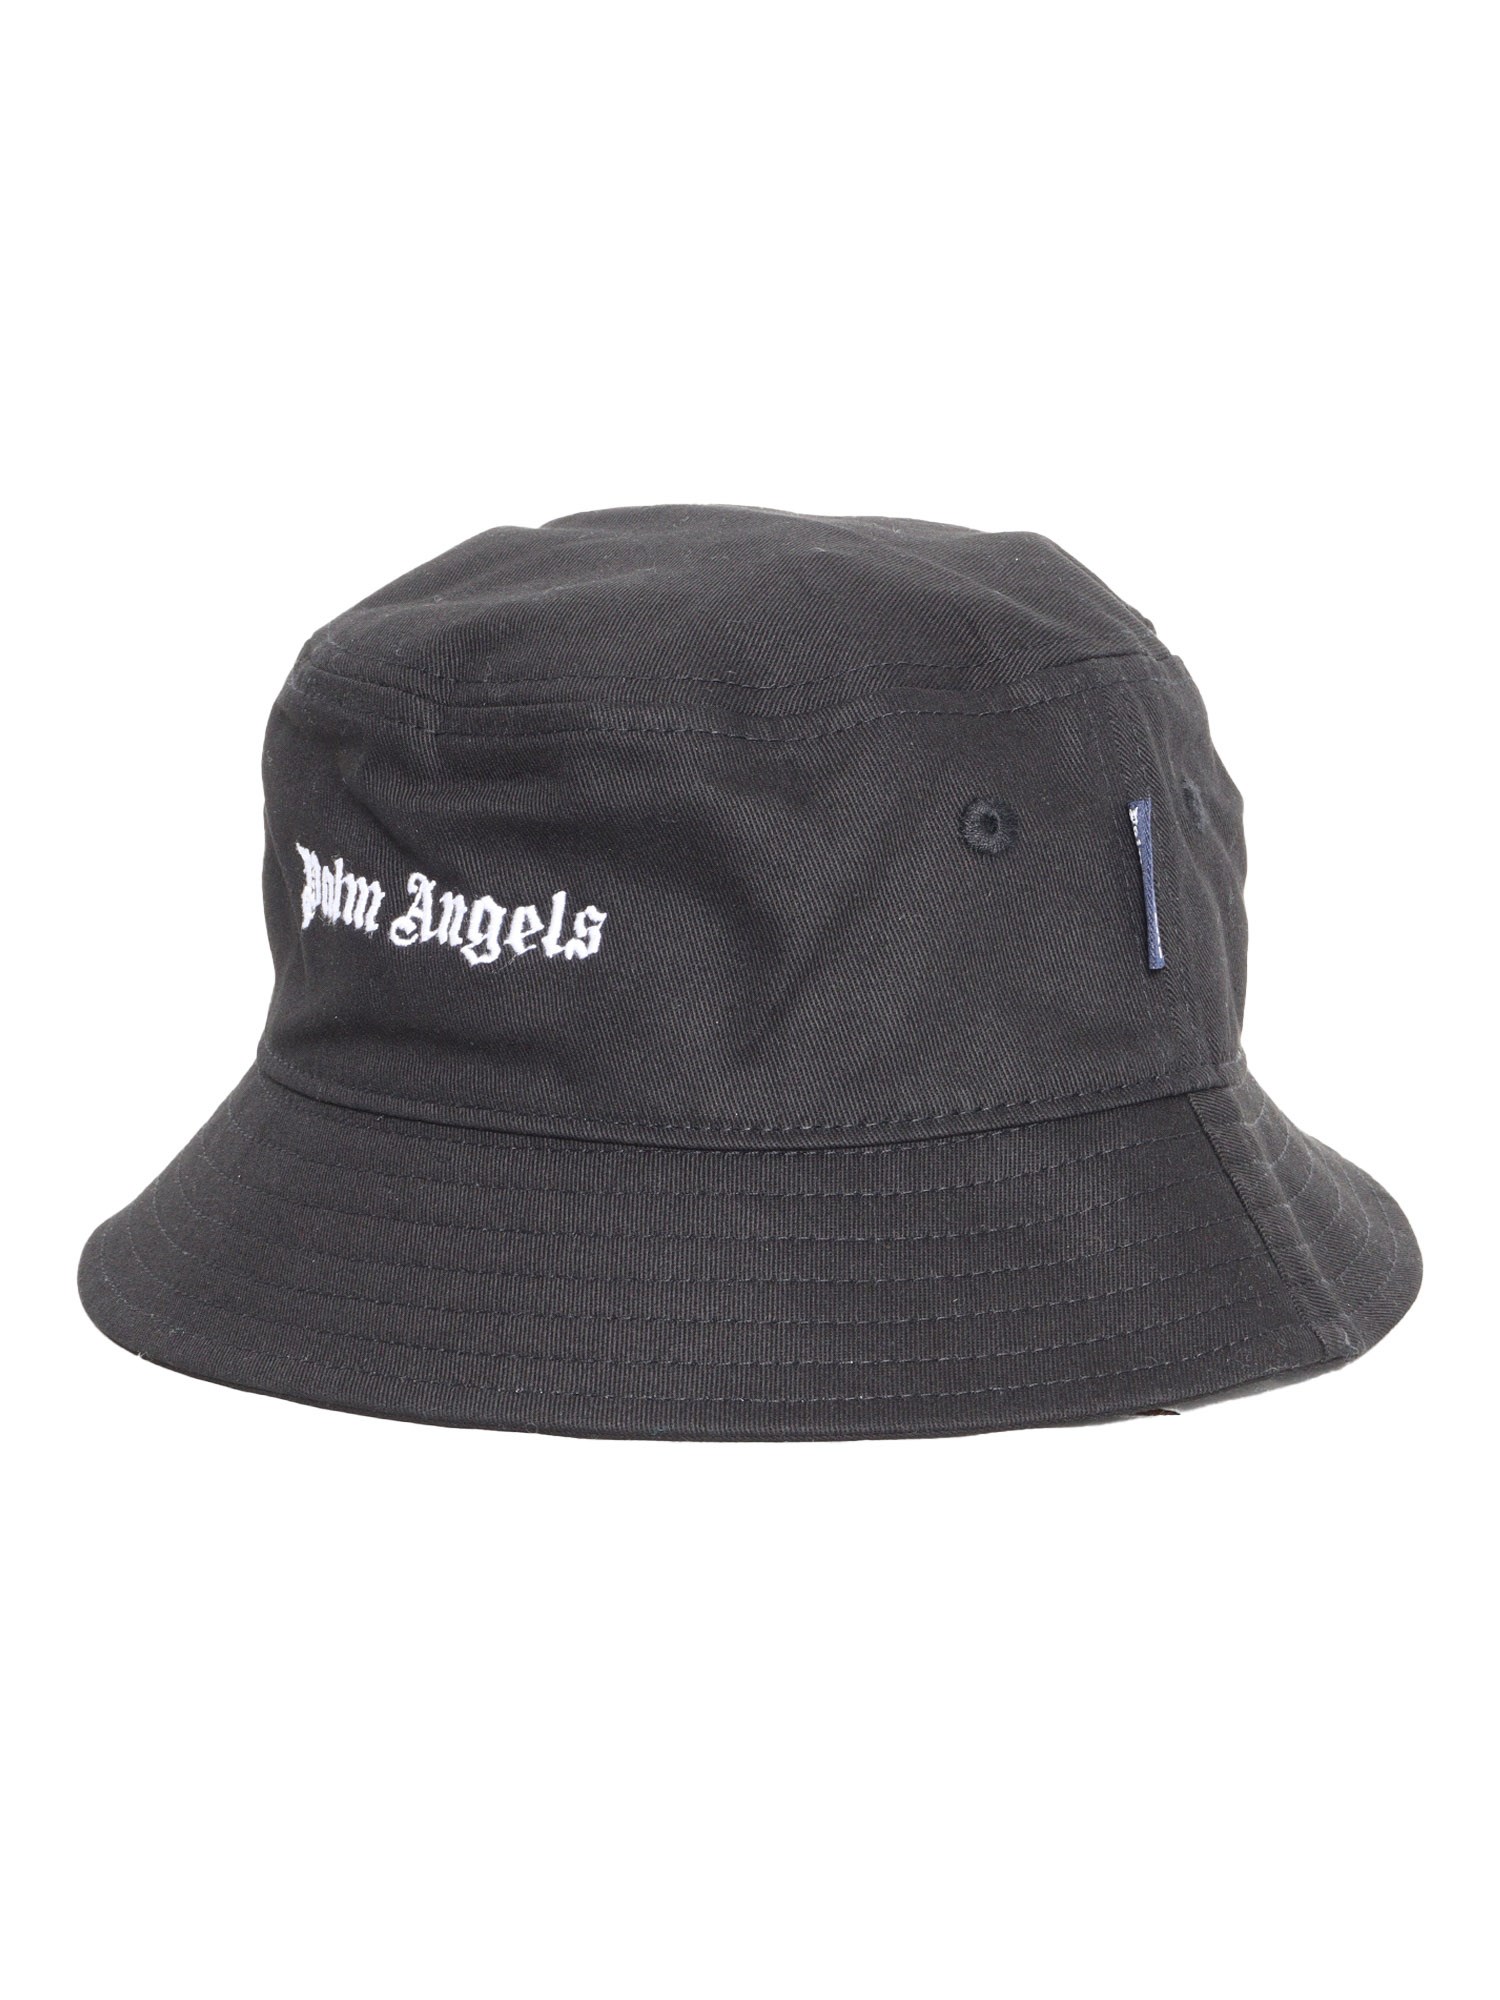 Shop Palm Angels Black Bucket Hat